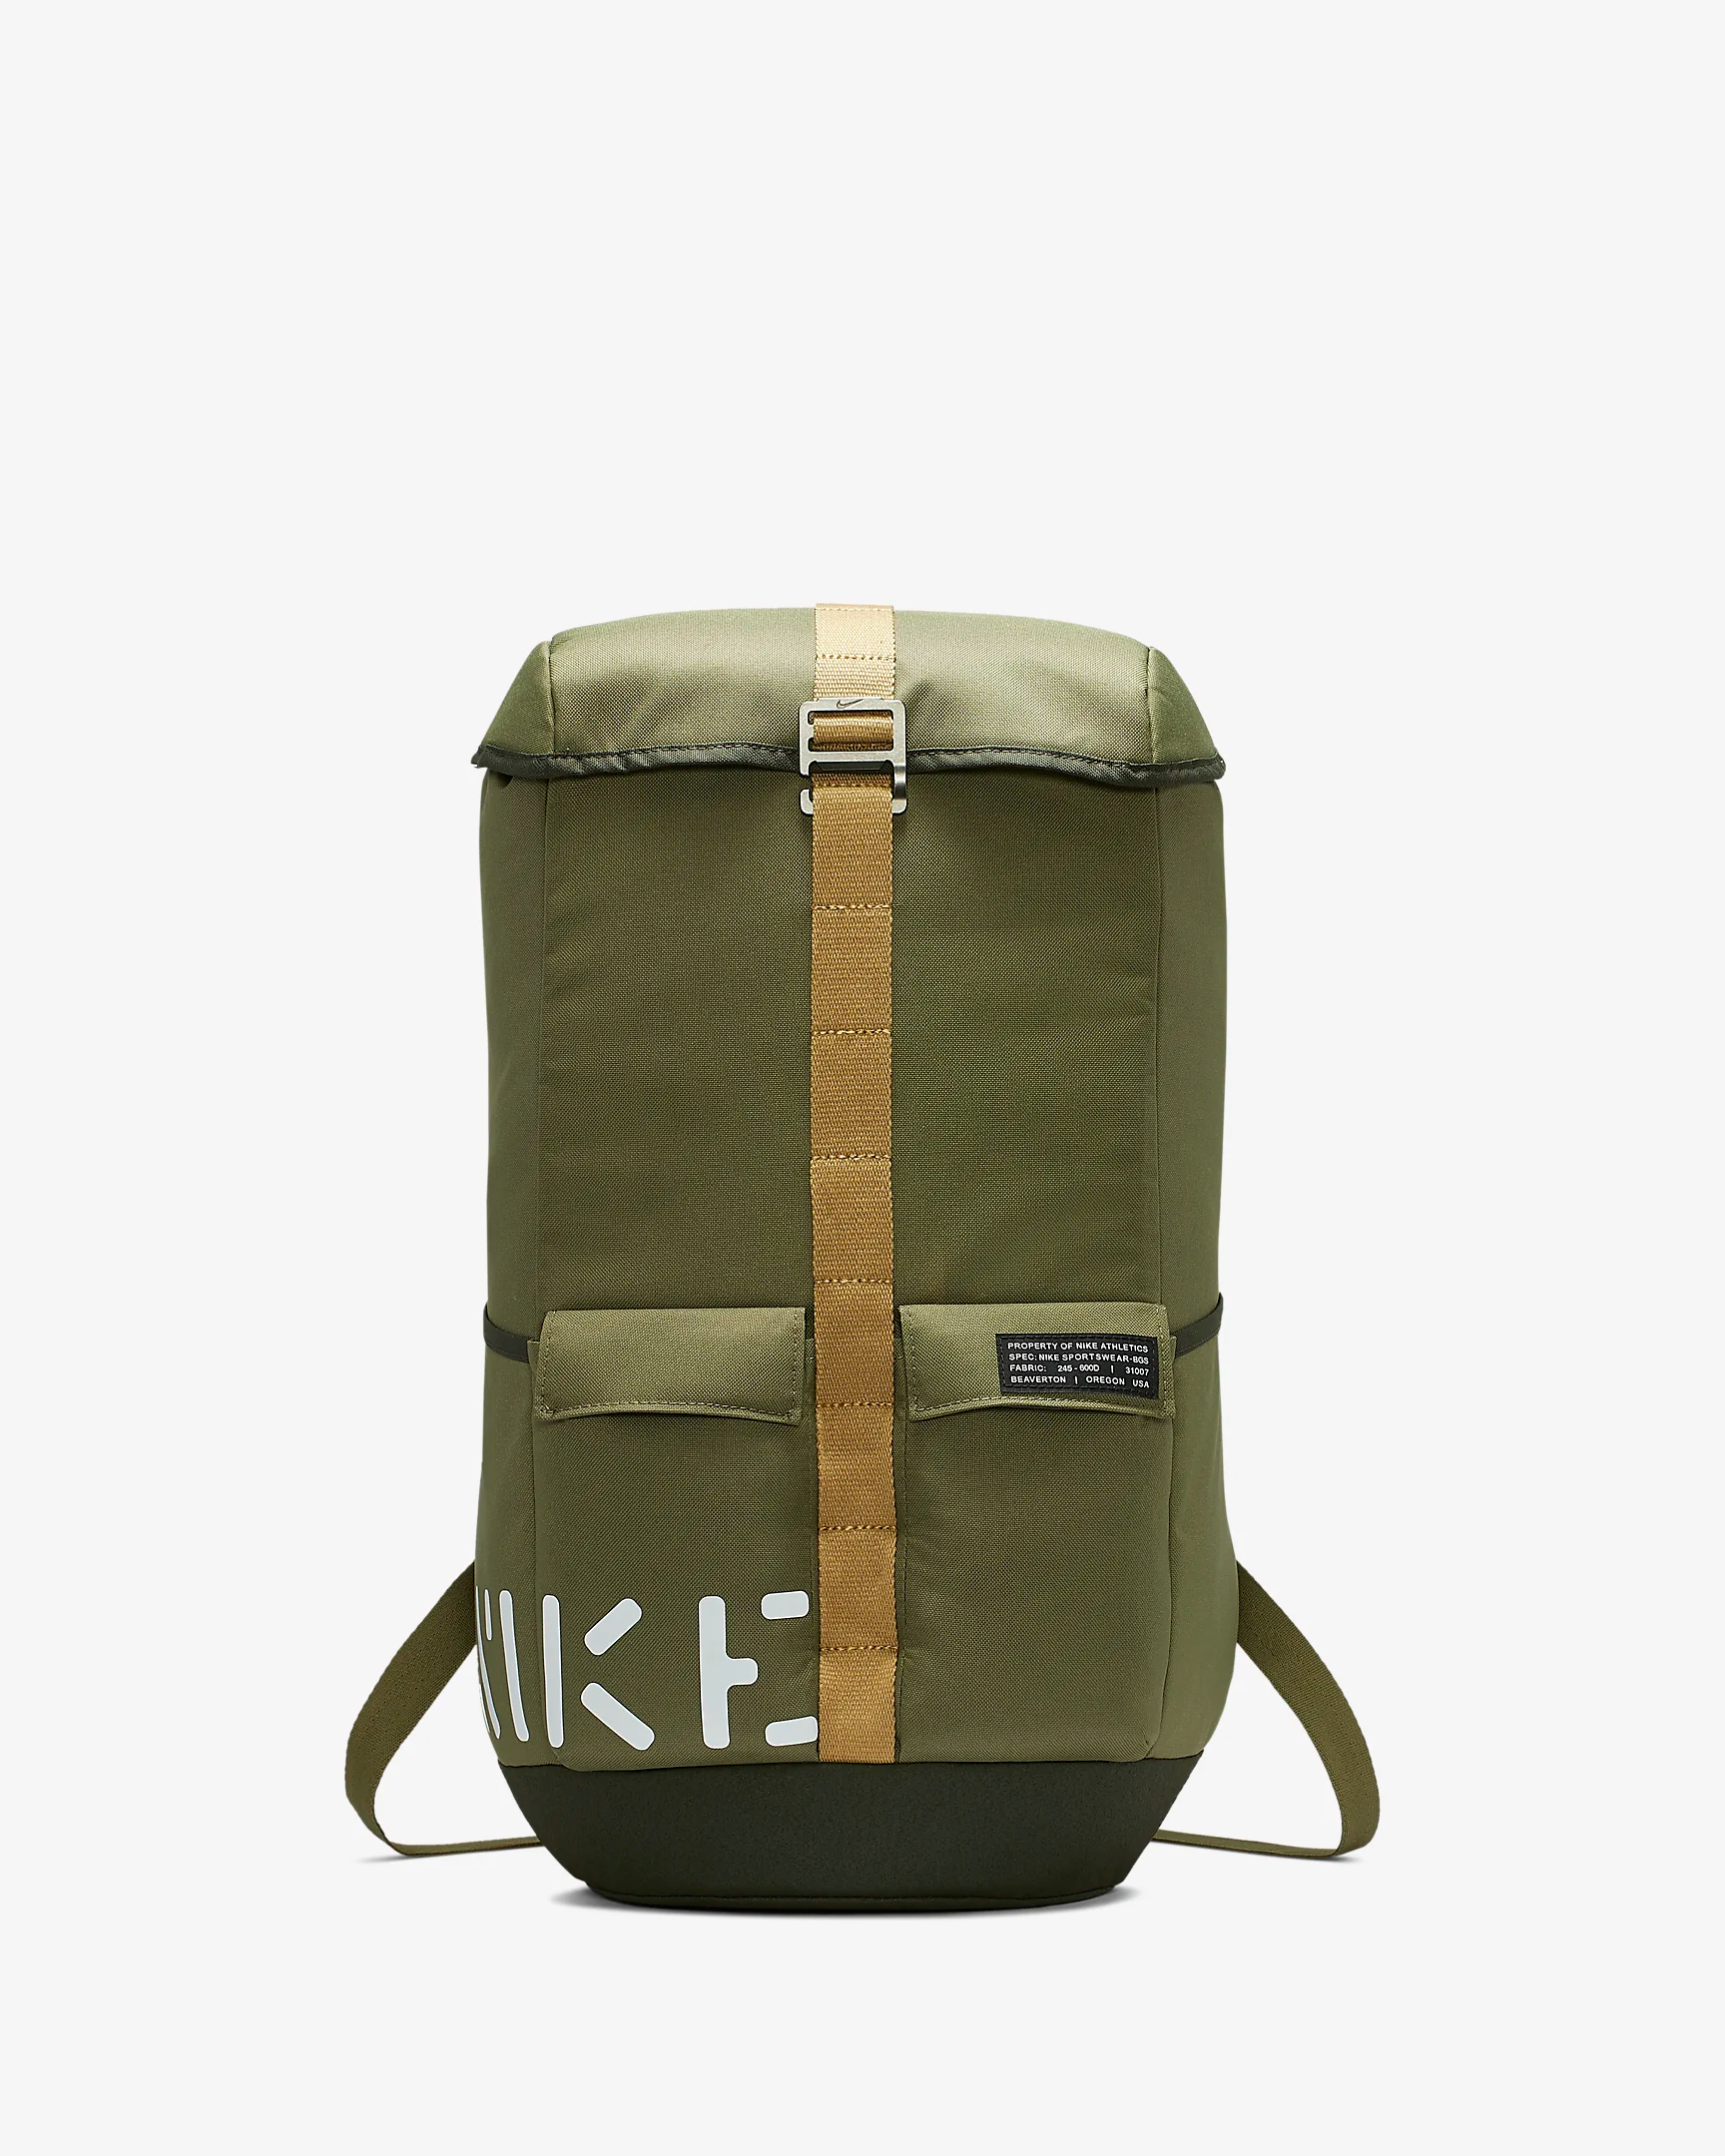 explore-printed-backpack-WkvFRD.png